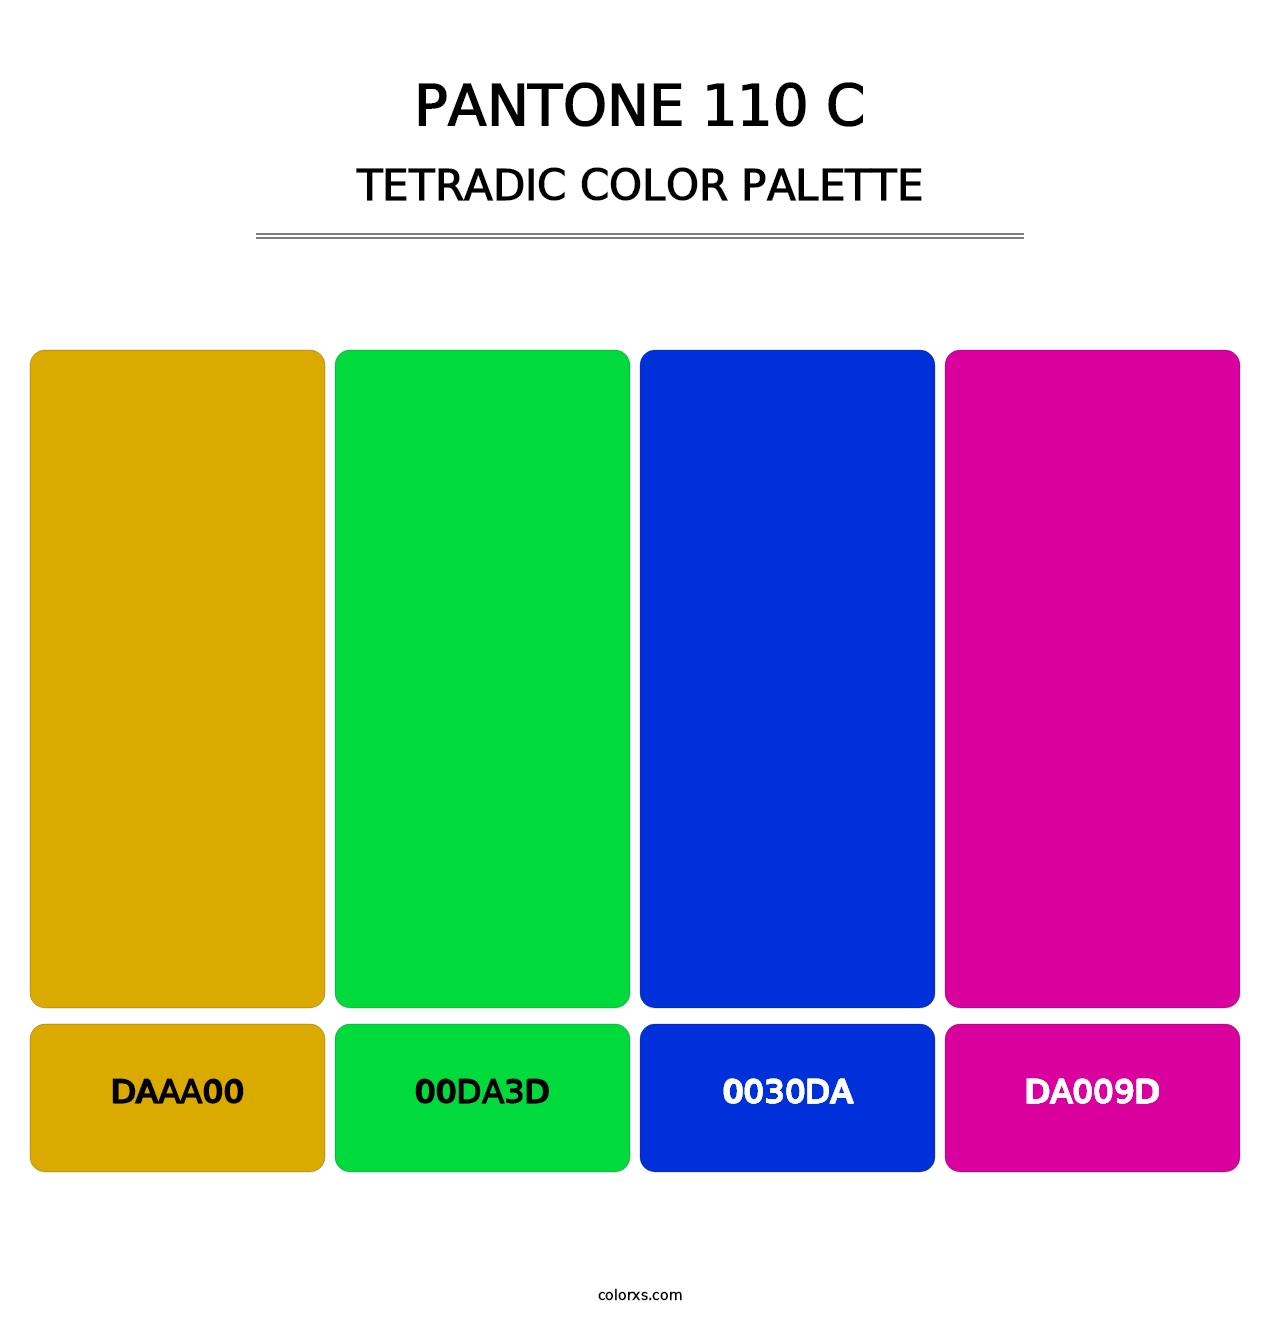 PANTONE 110 C - Tetradic Color Palette